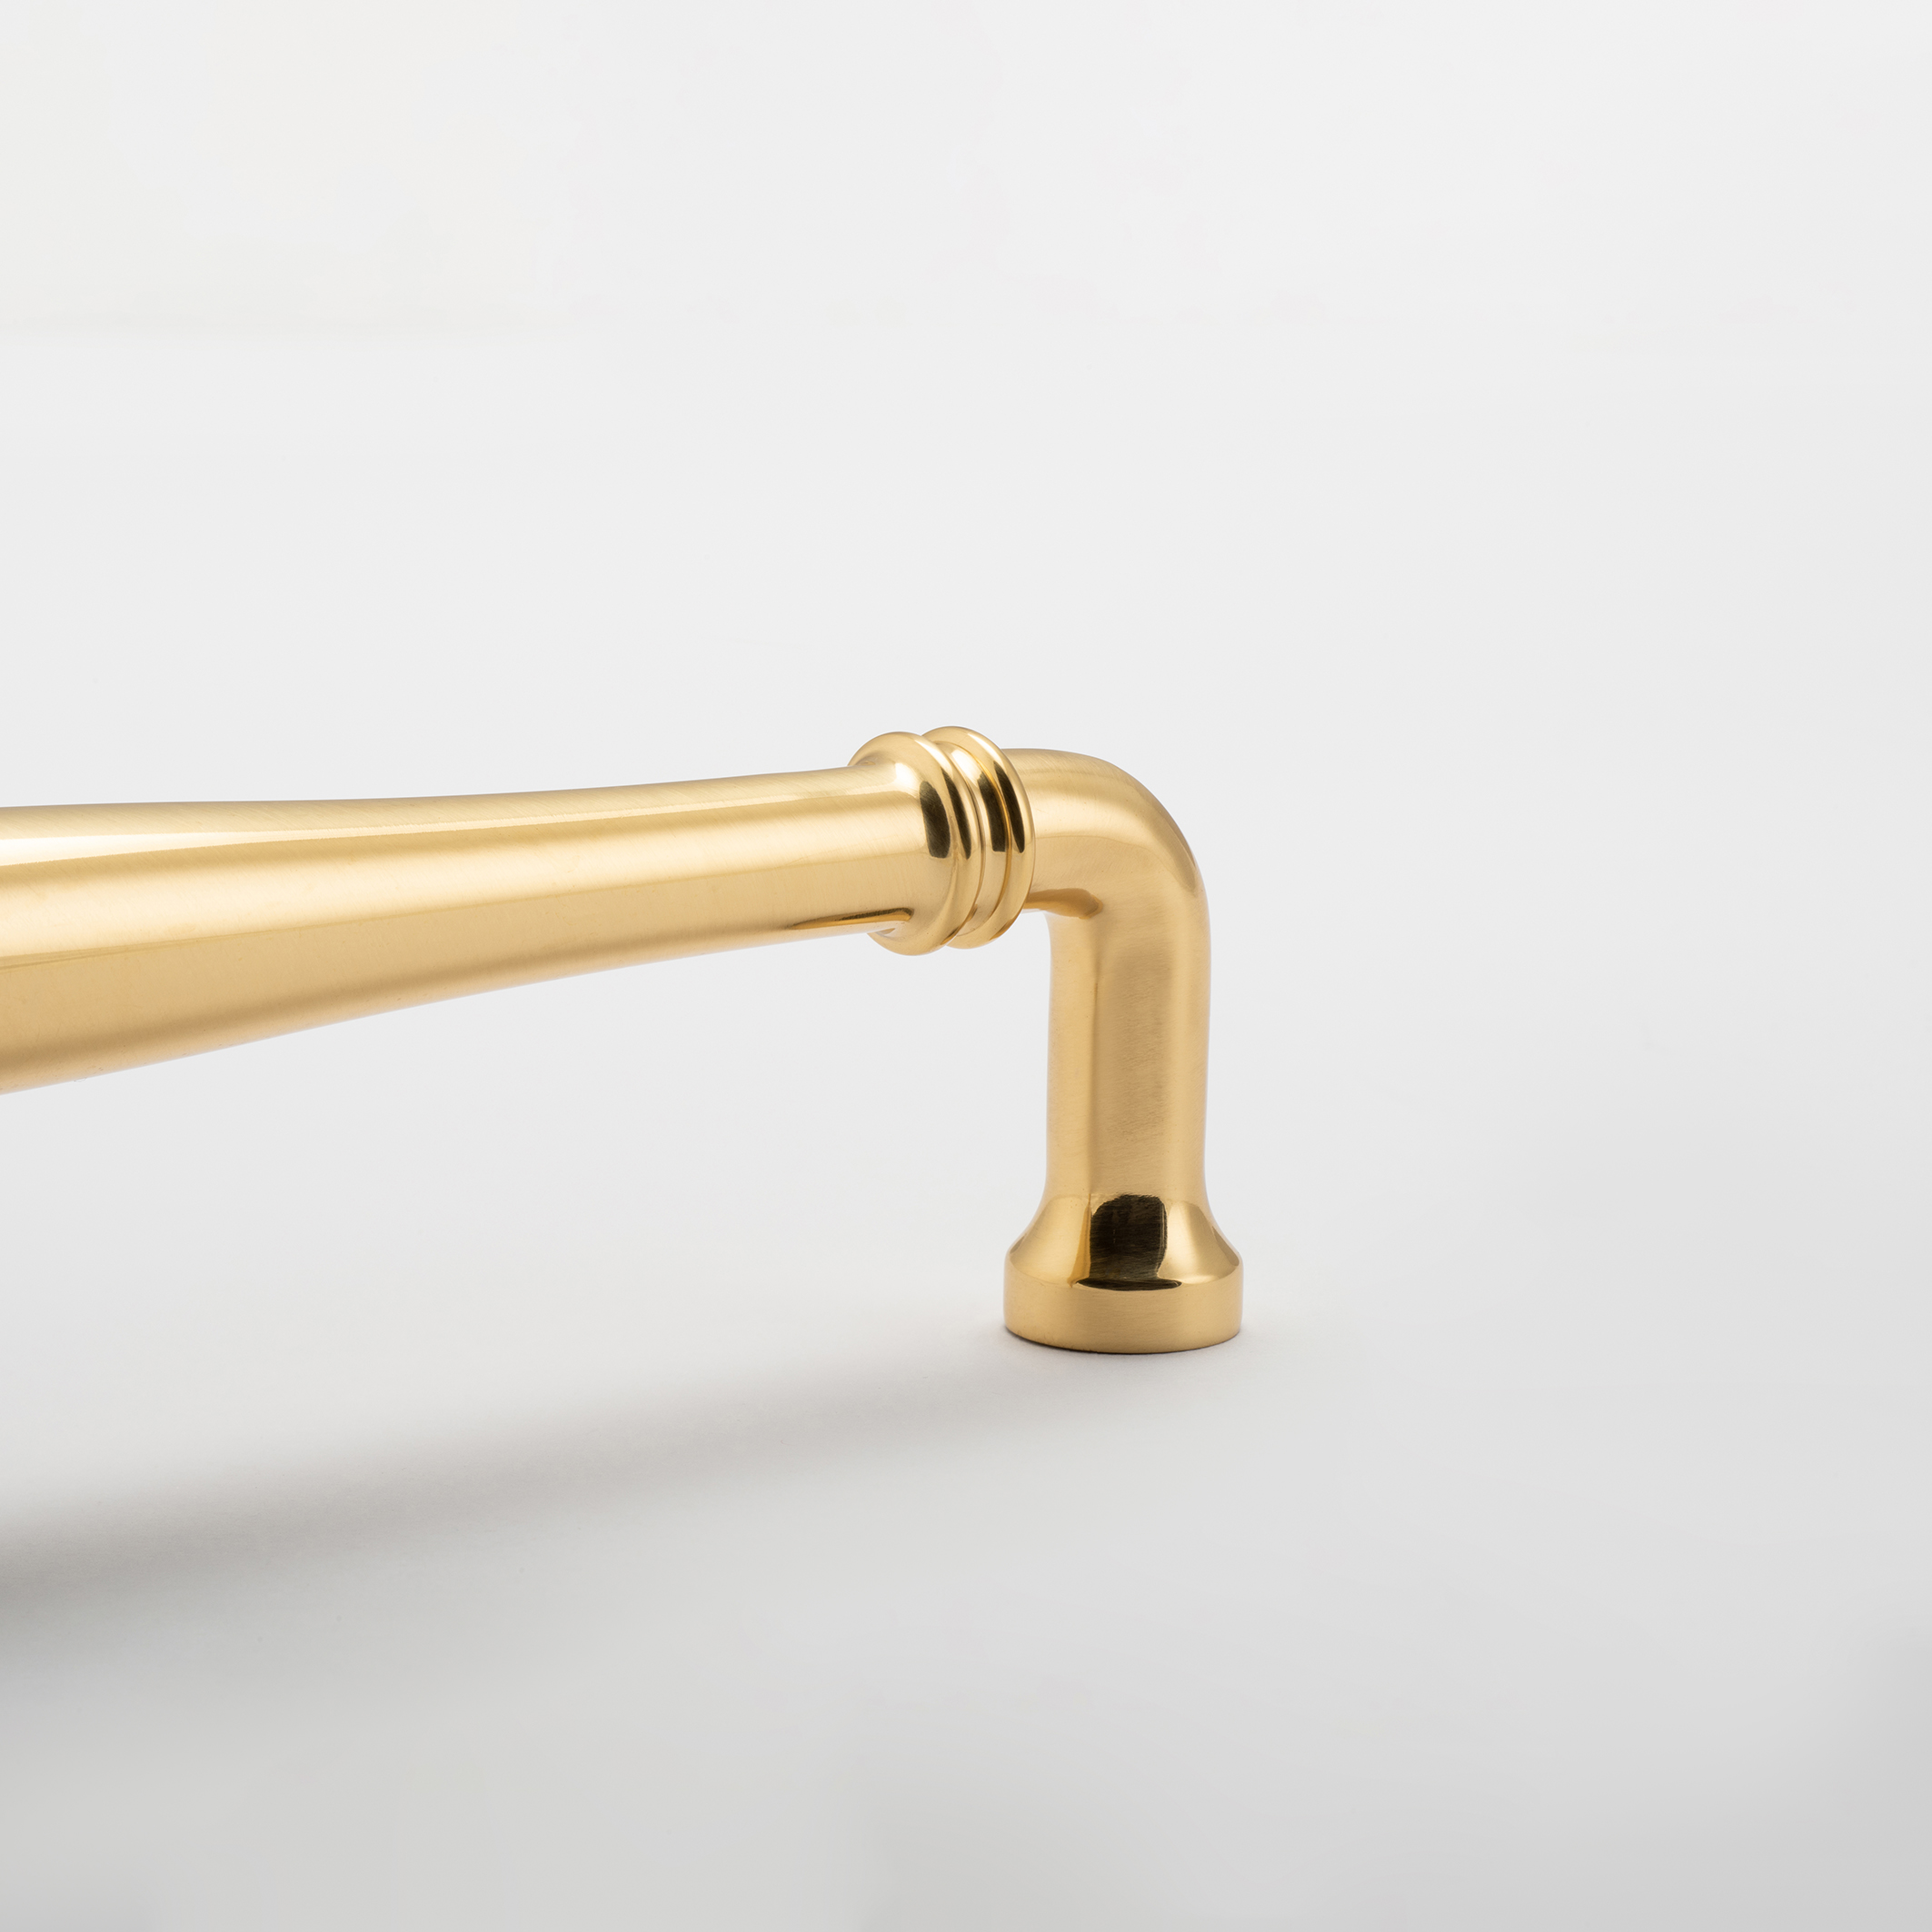 21070 - Sarlat Cabinet Pull - CTC160mm - Polished Brass